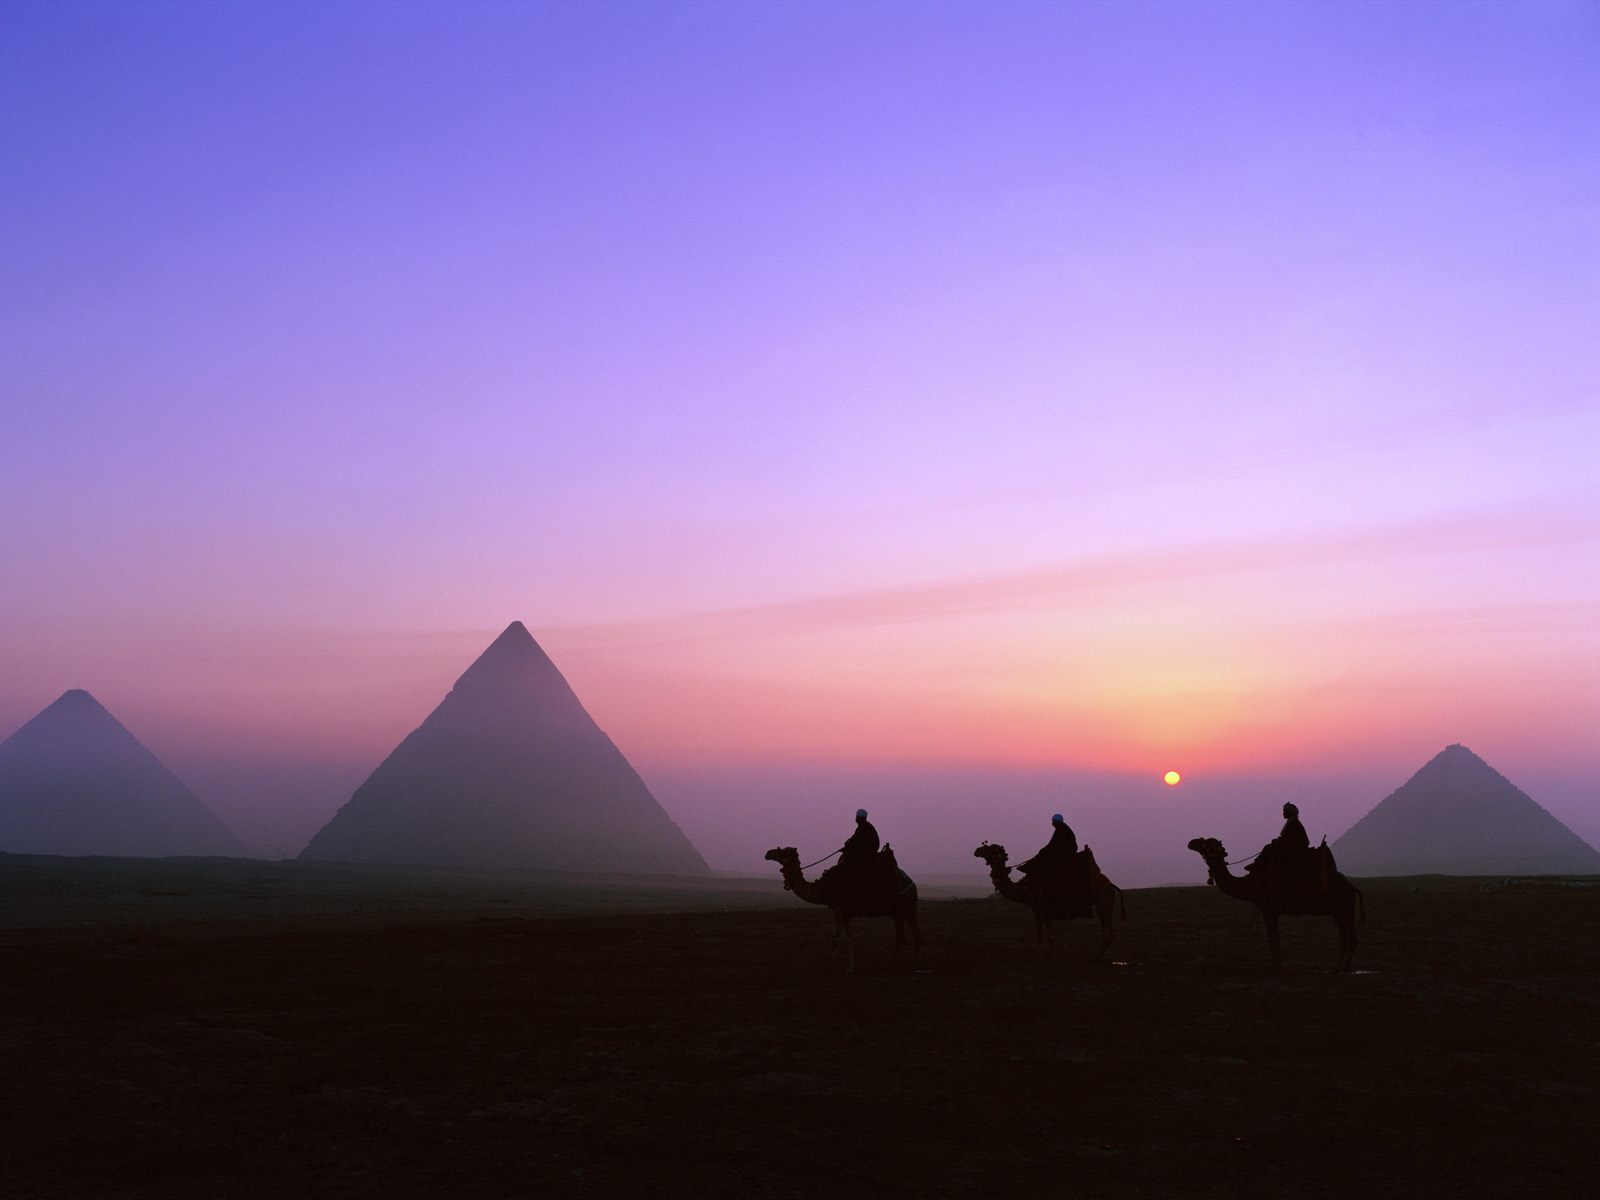 mystic-journey-pyramids-giza-egypt-1-1600x1200.jpg